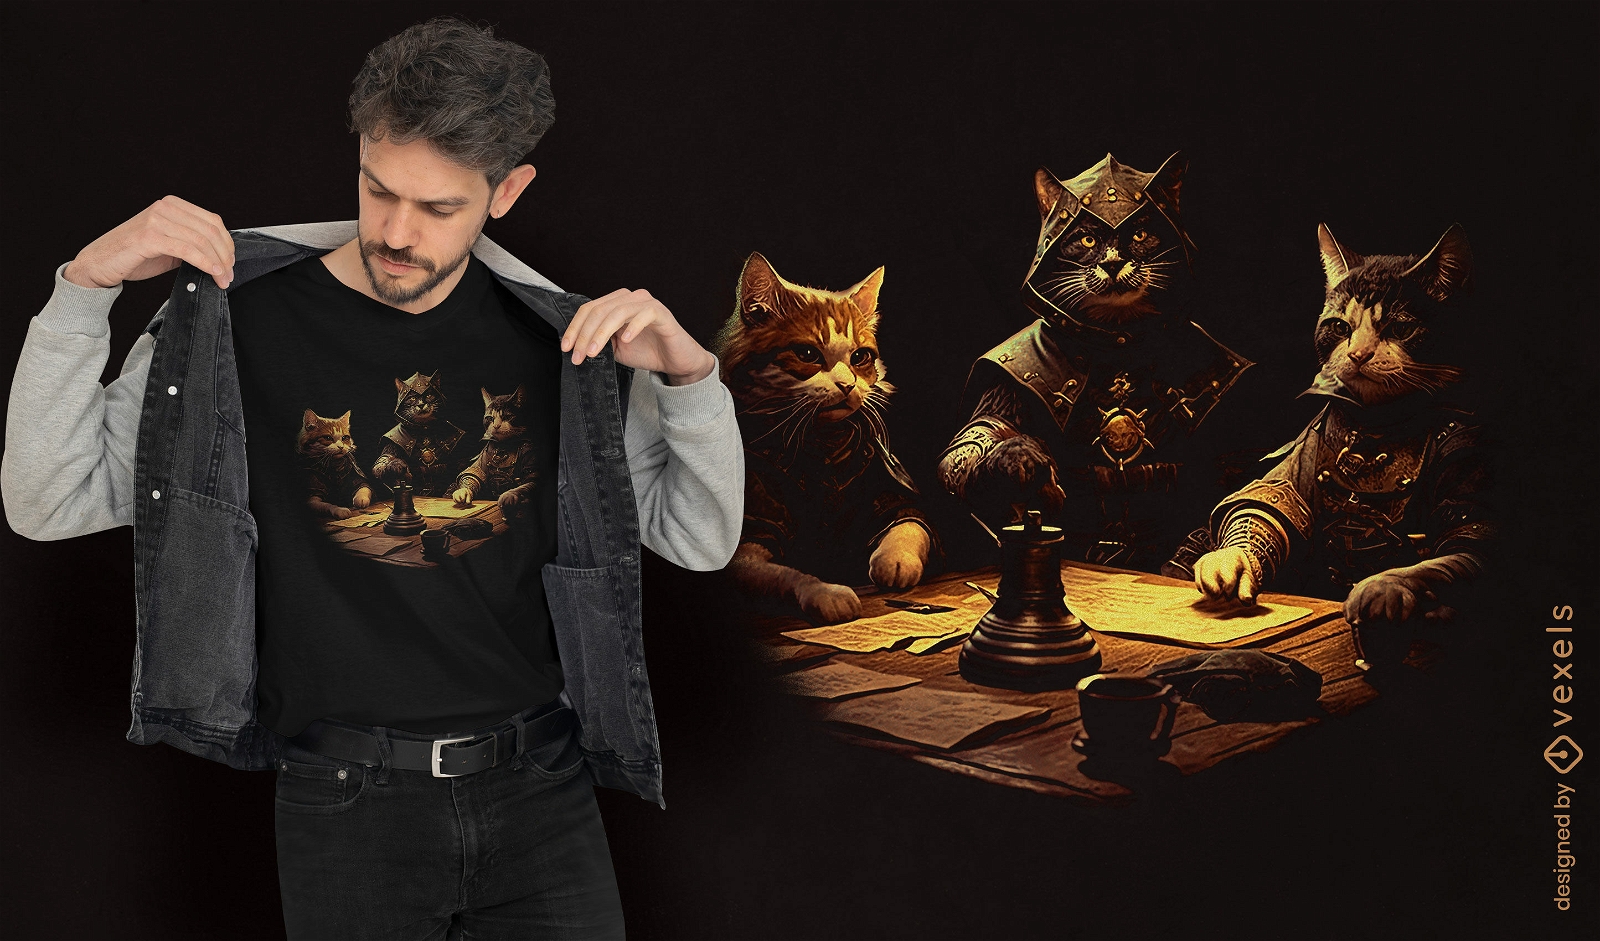 Dise?o de camiseta de gatos RPG.